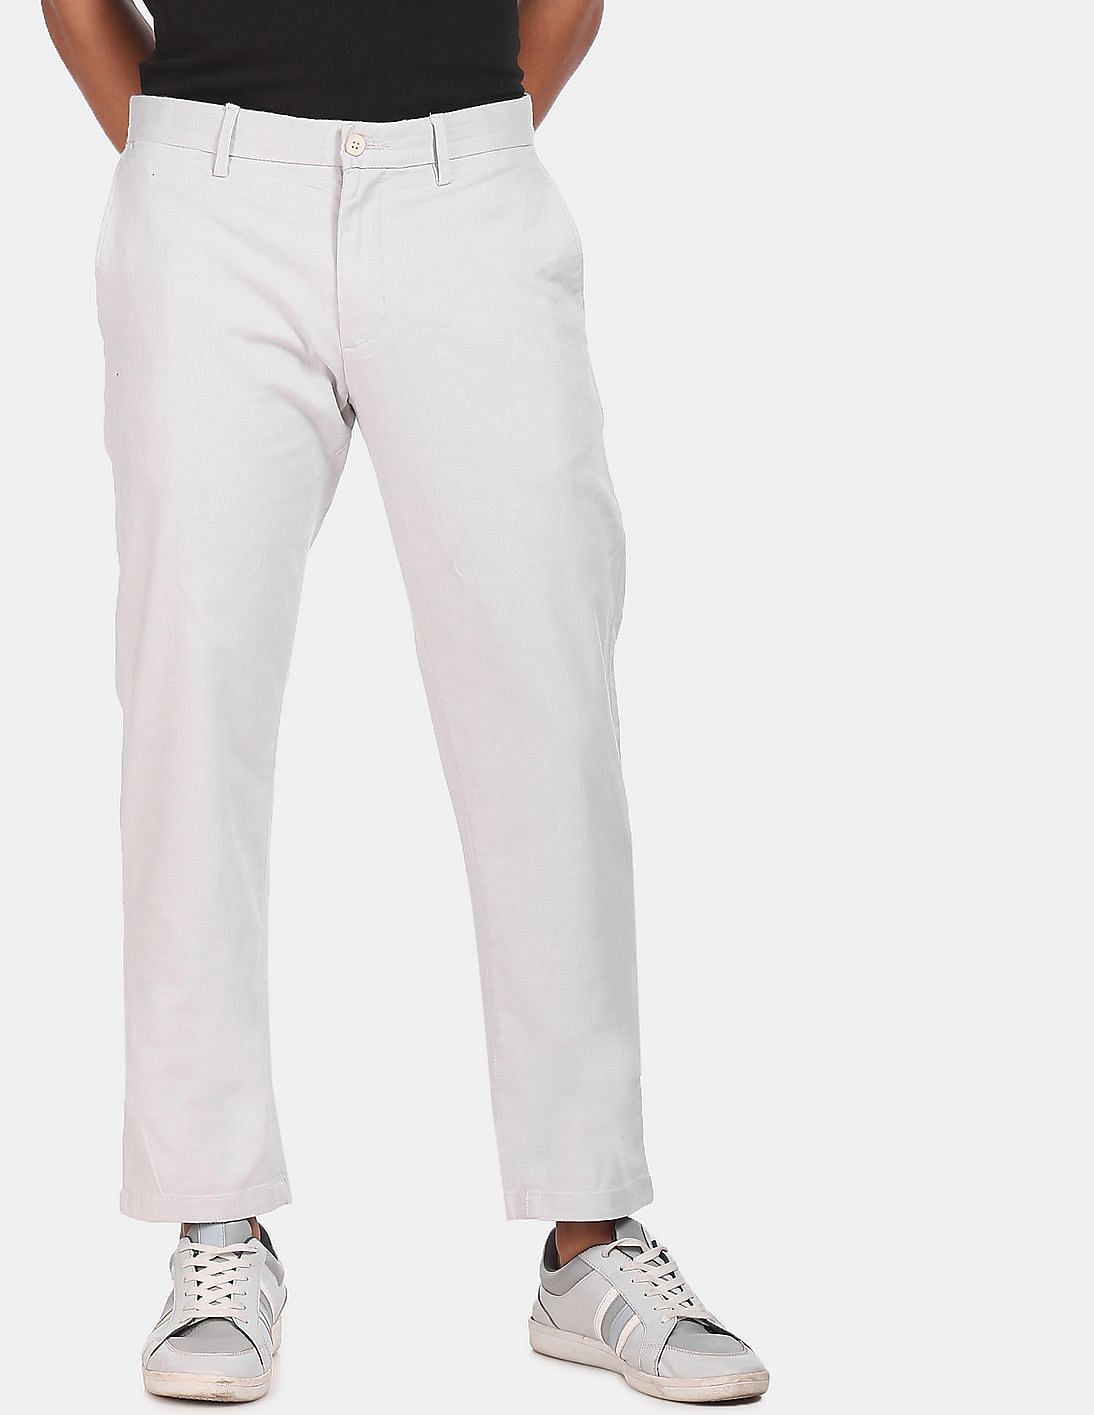 JLindeberg Harris Pant Jogpant pants in navy buy online  Golf House